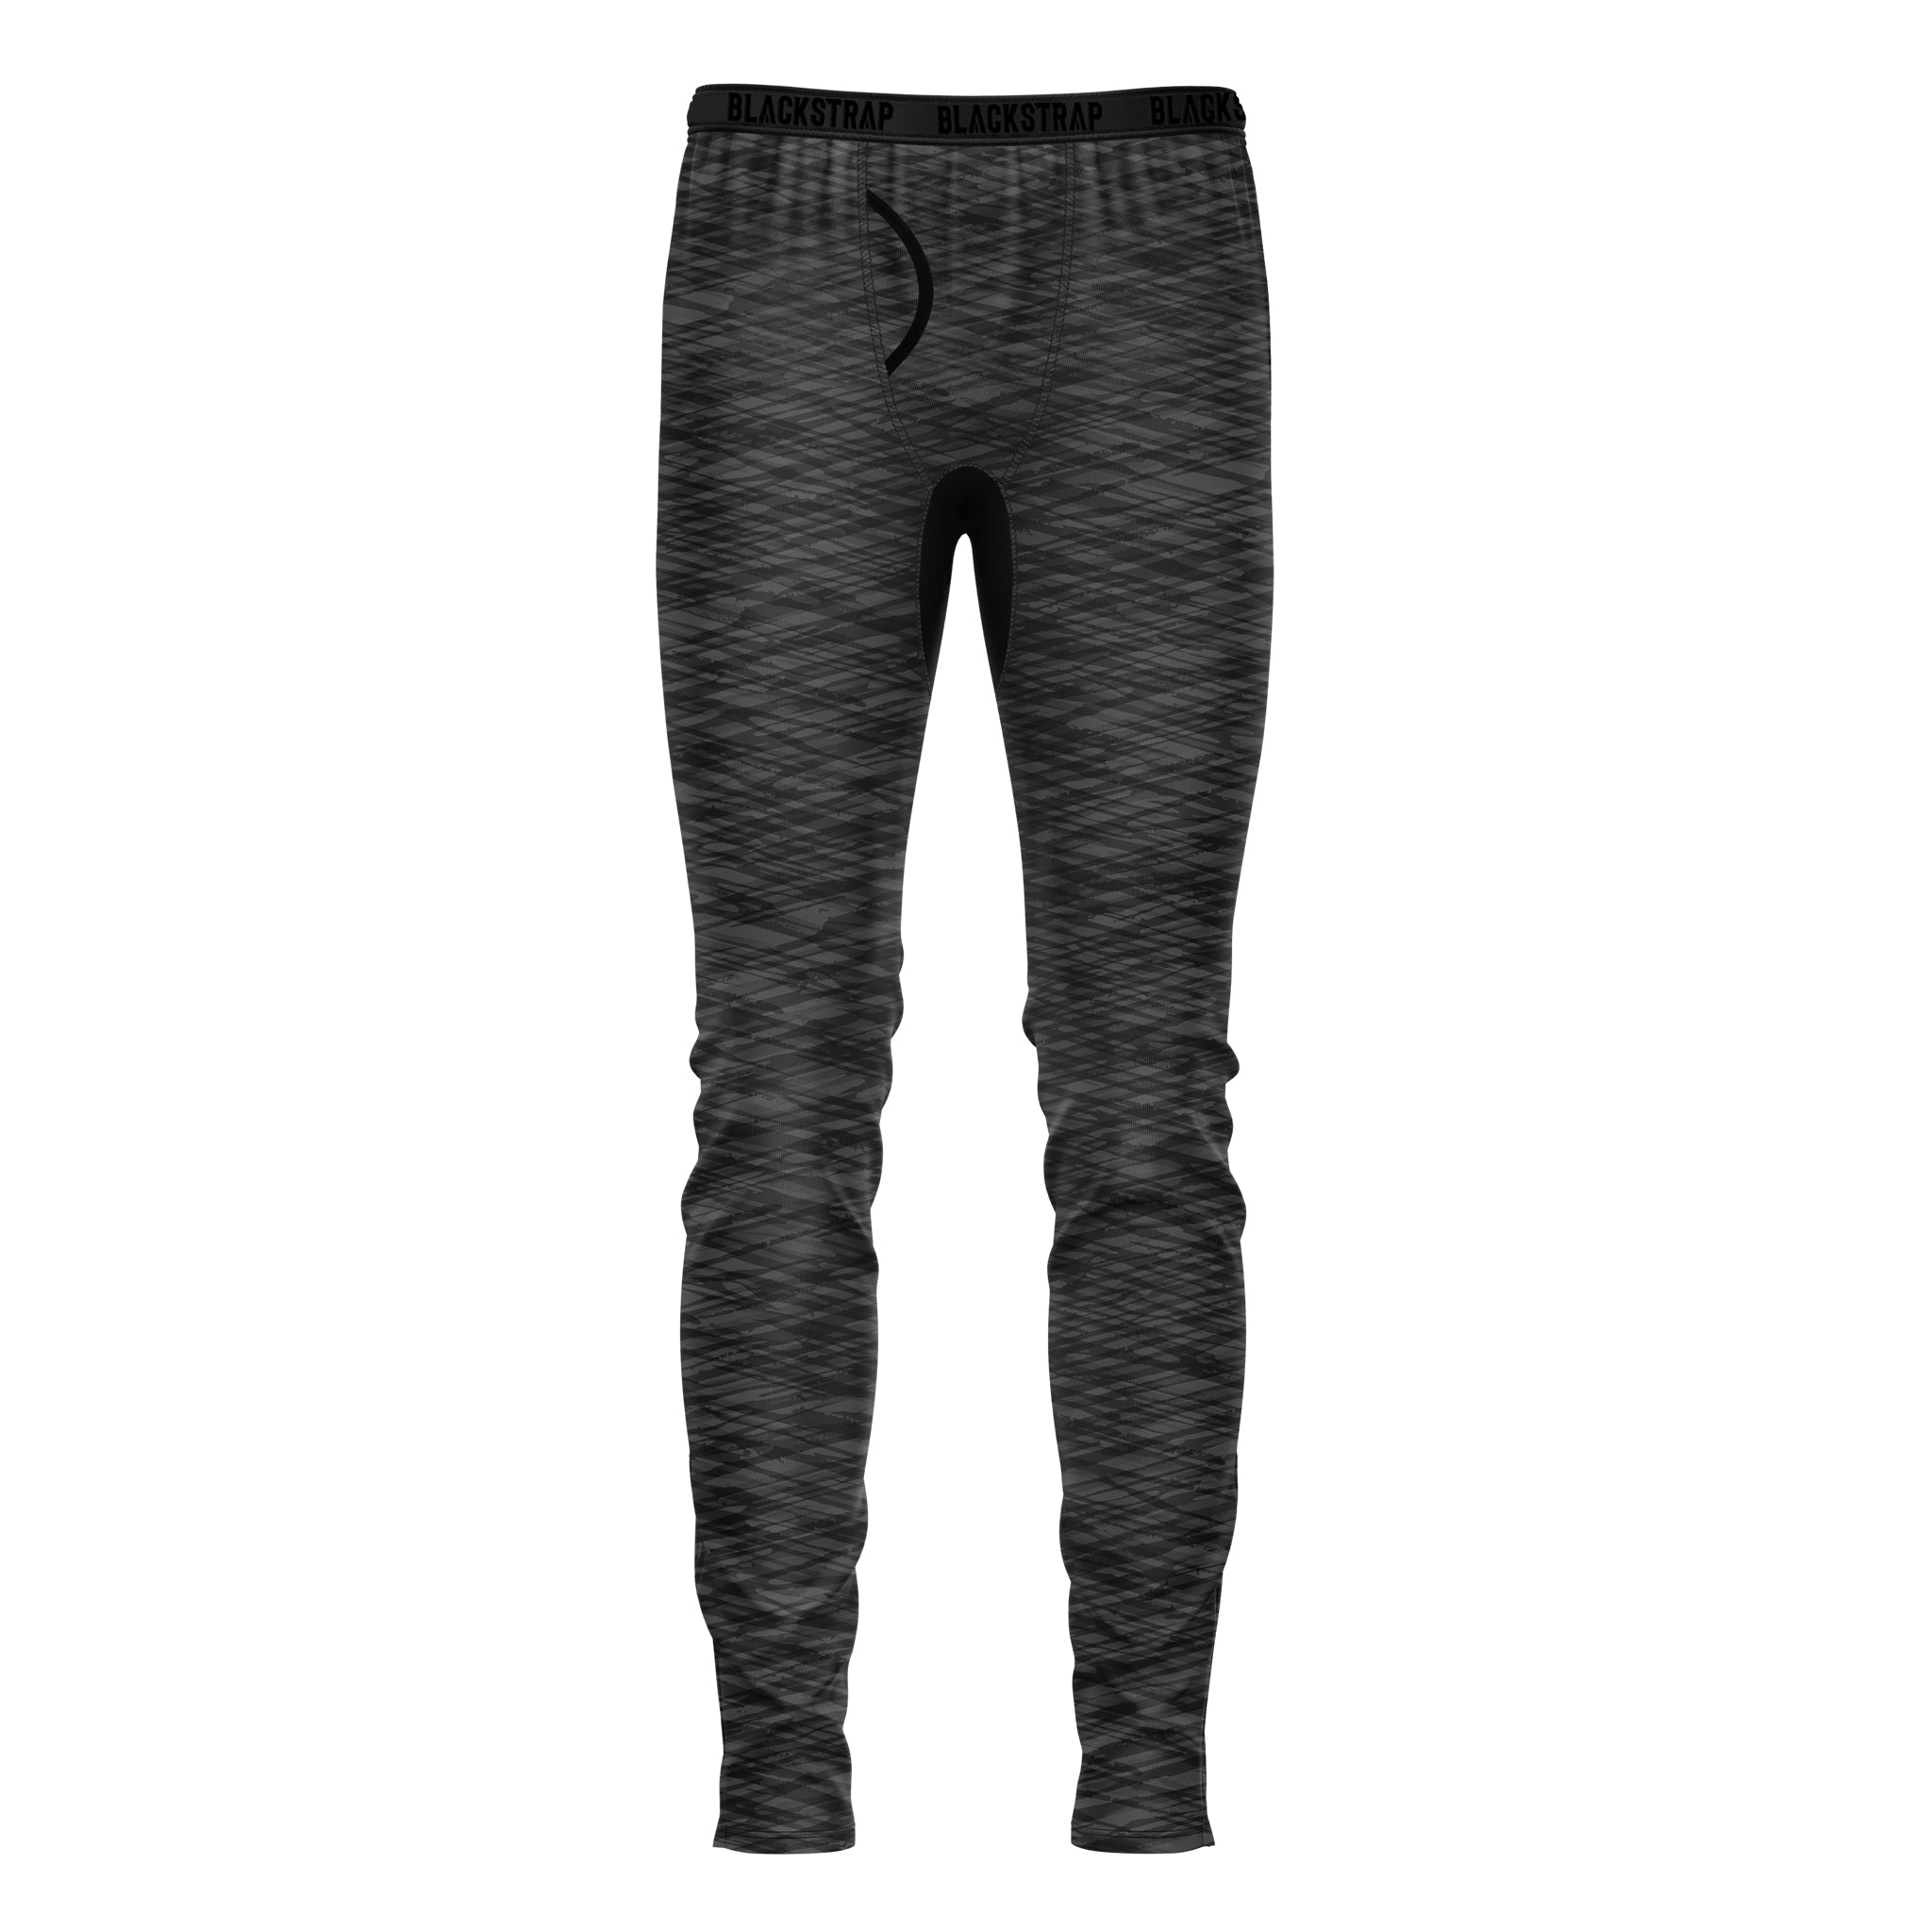 Men's Summit Base Layer Pants BlackStrap Hatched Charcoal S #color_hatched charcoal